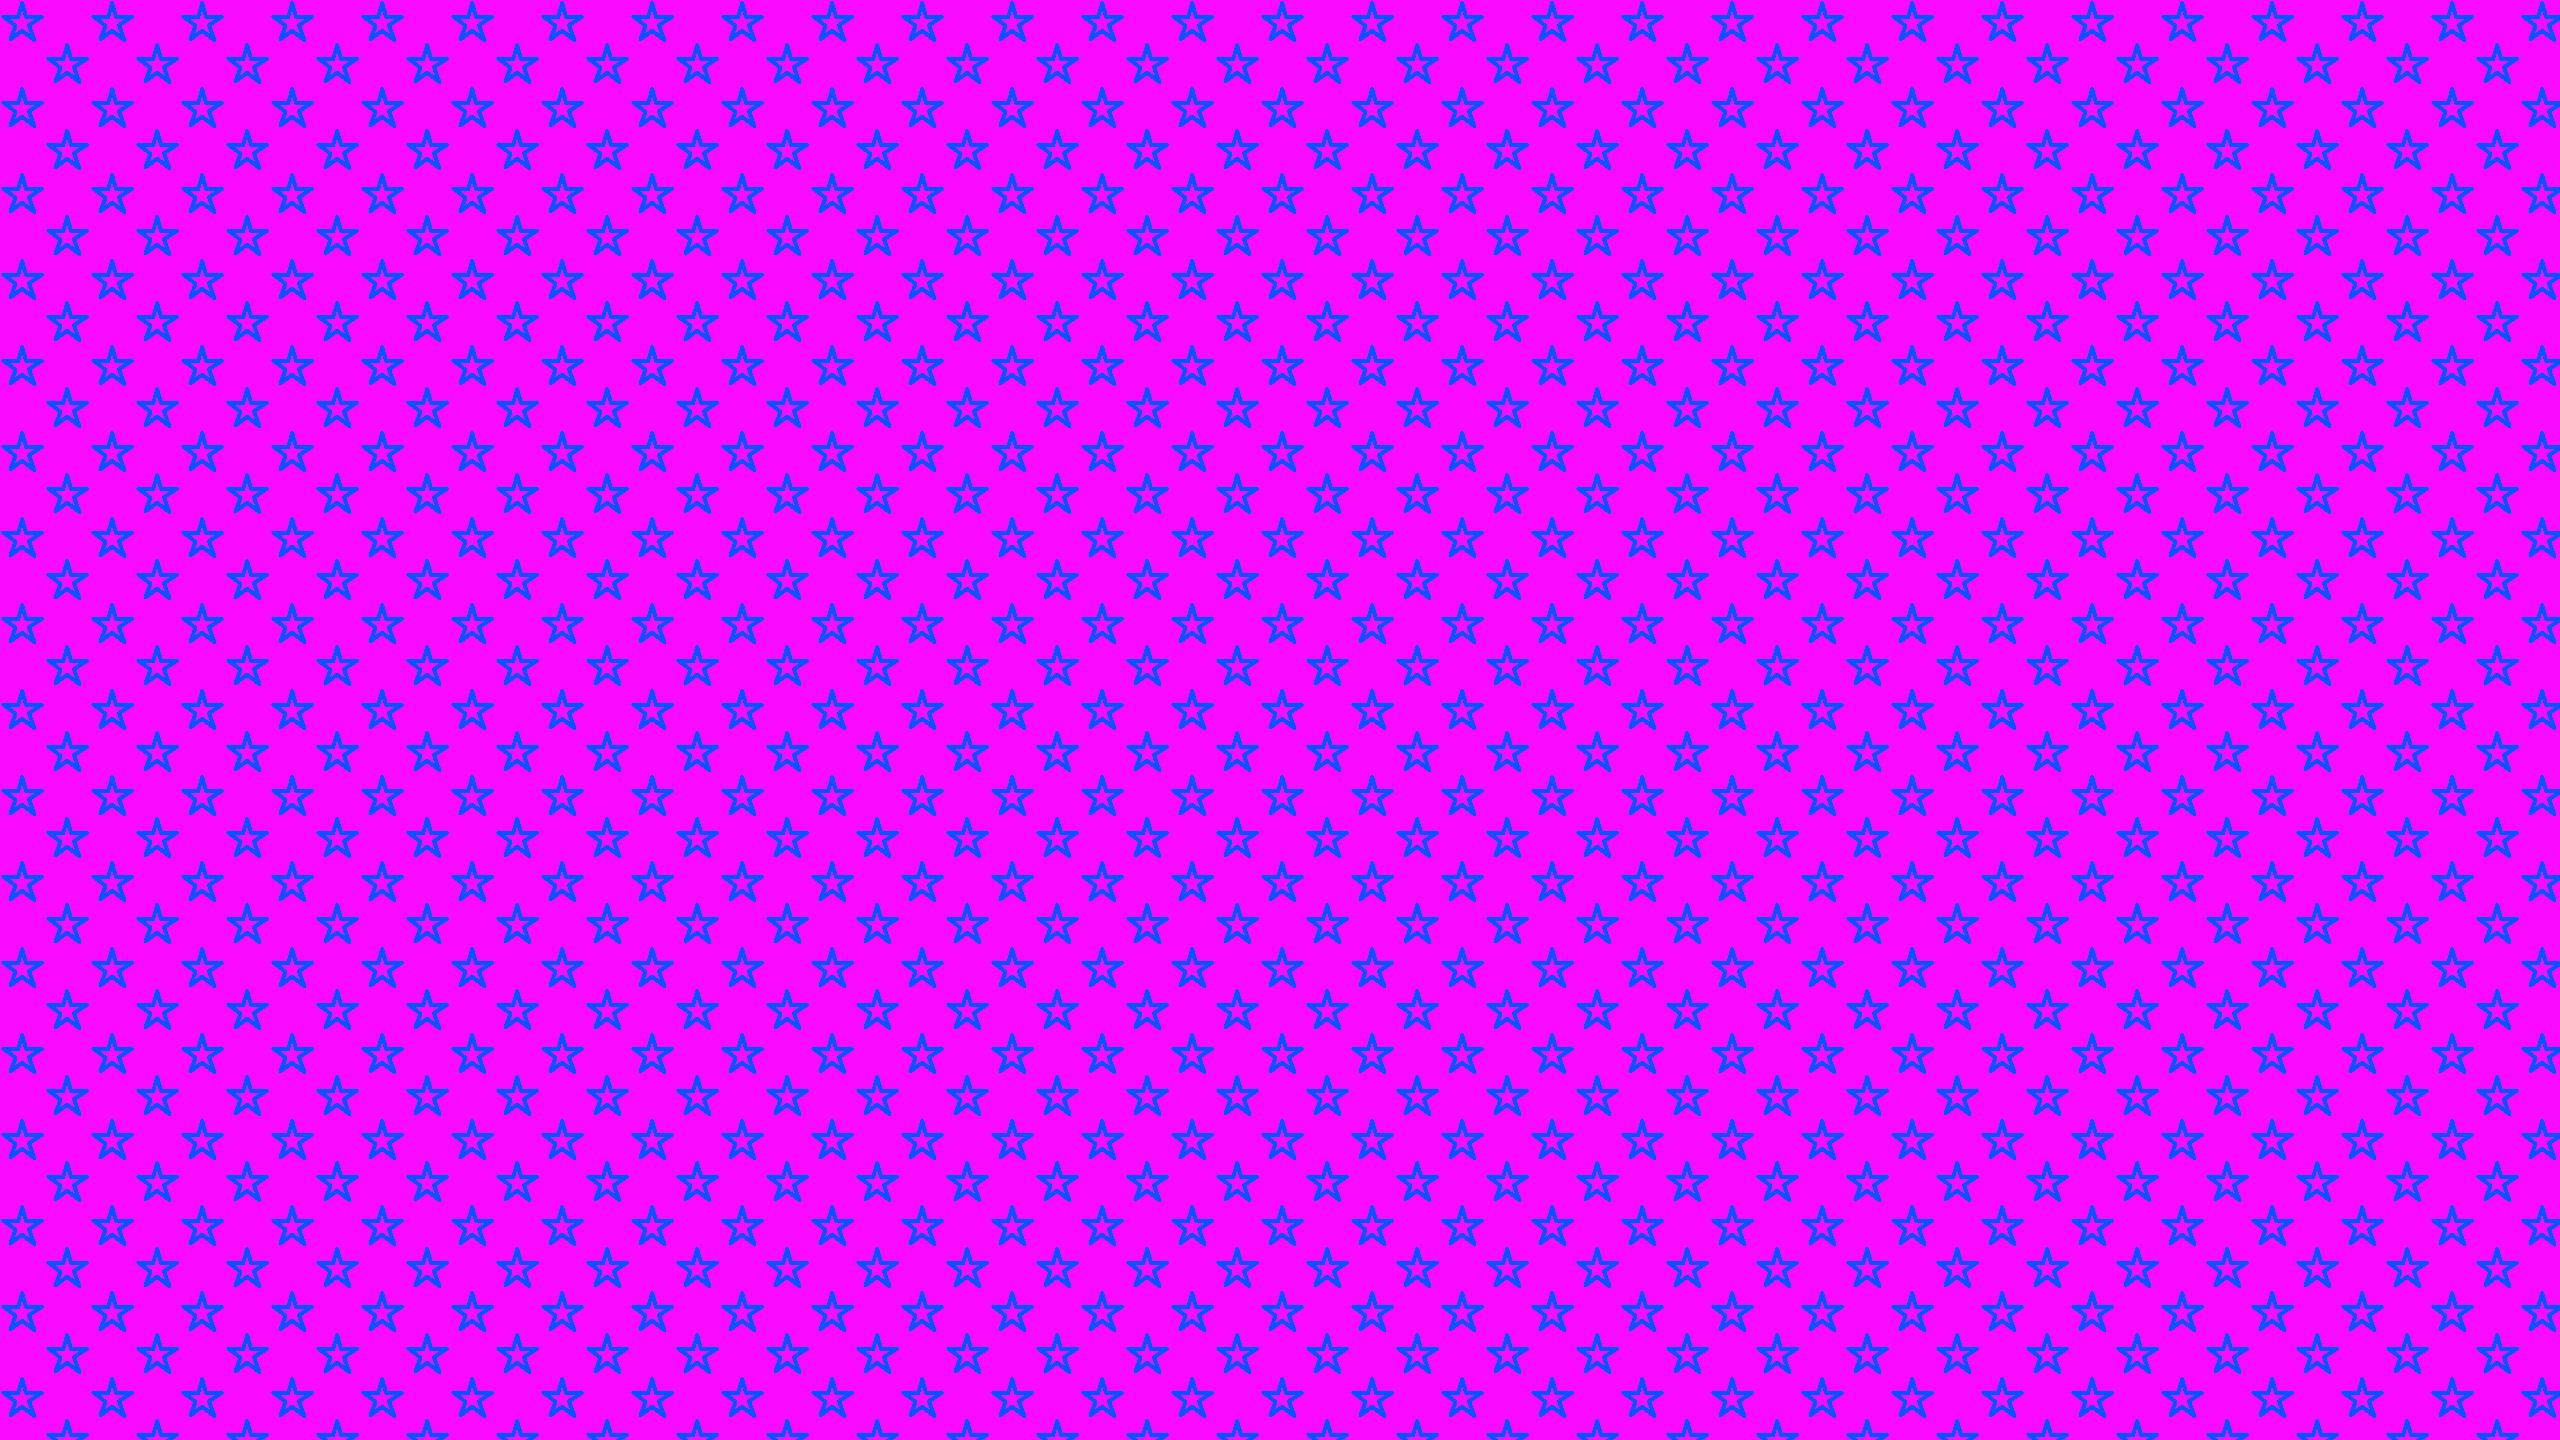 Pink Purple Stars Desktop Wallpaper is easy Just save the wallpaper